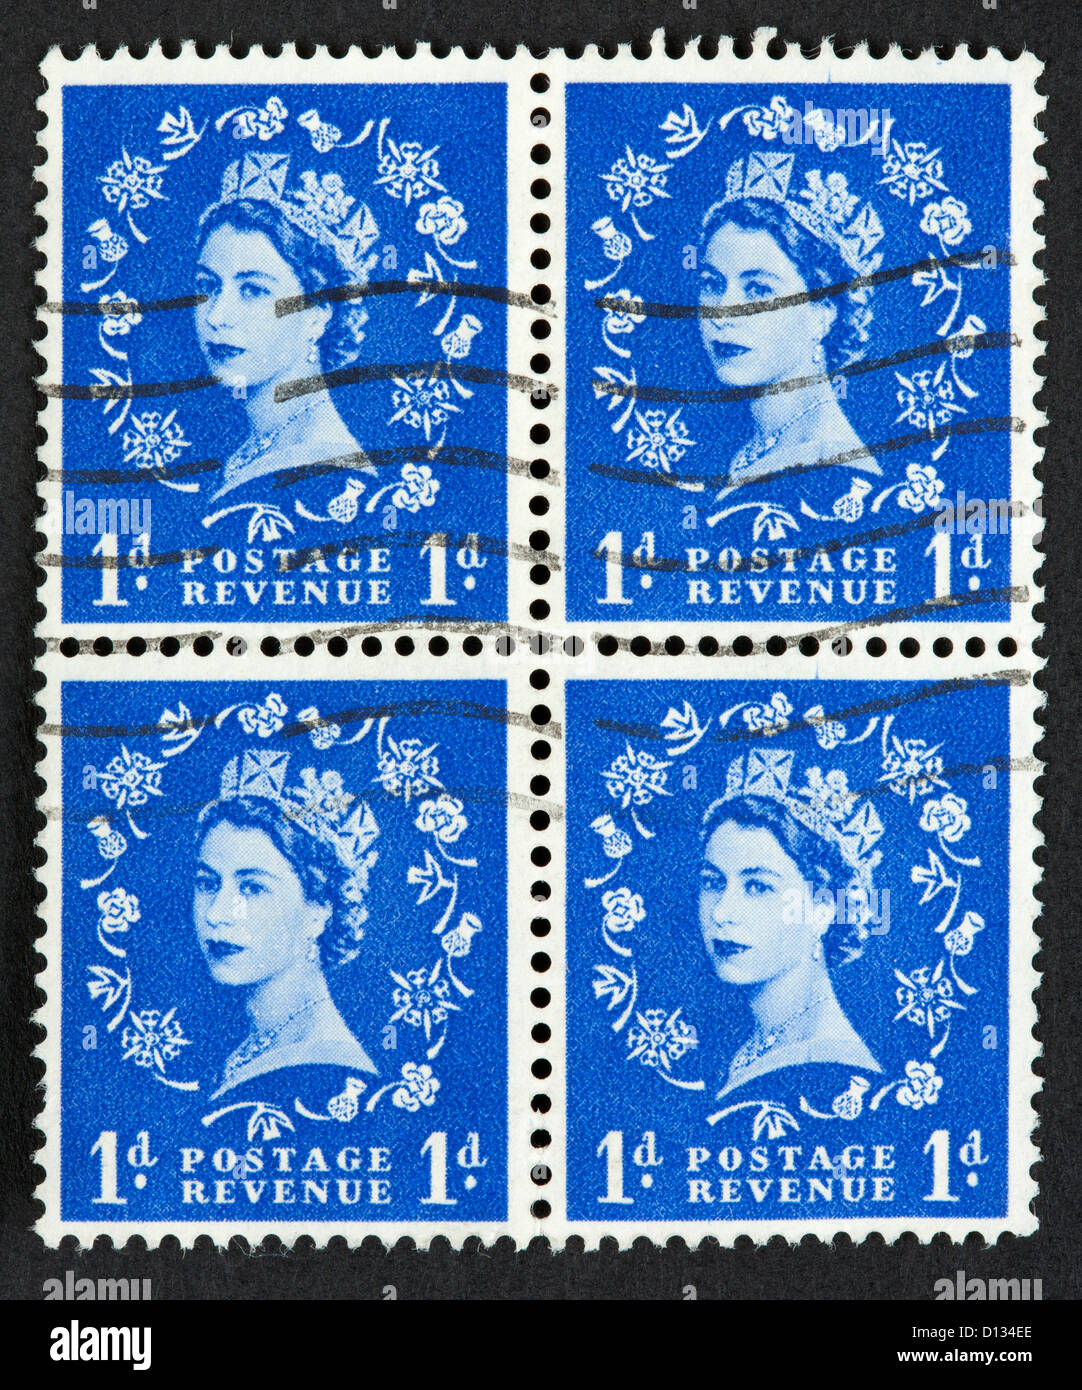 British postage stamps Stock Photo